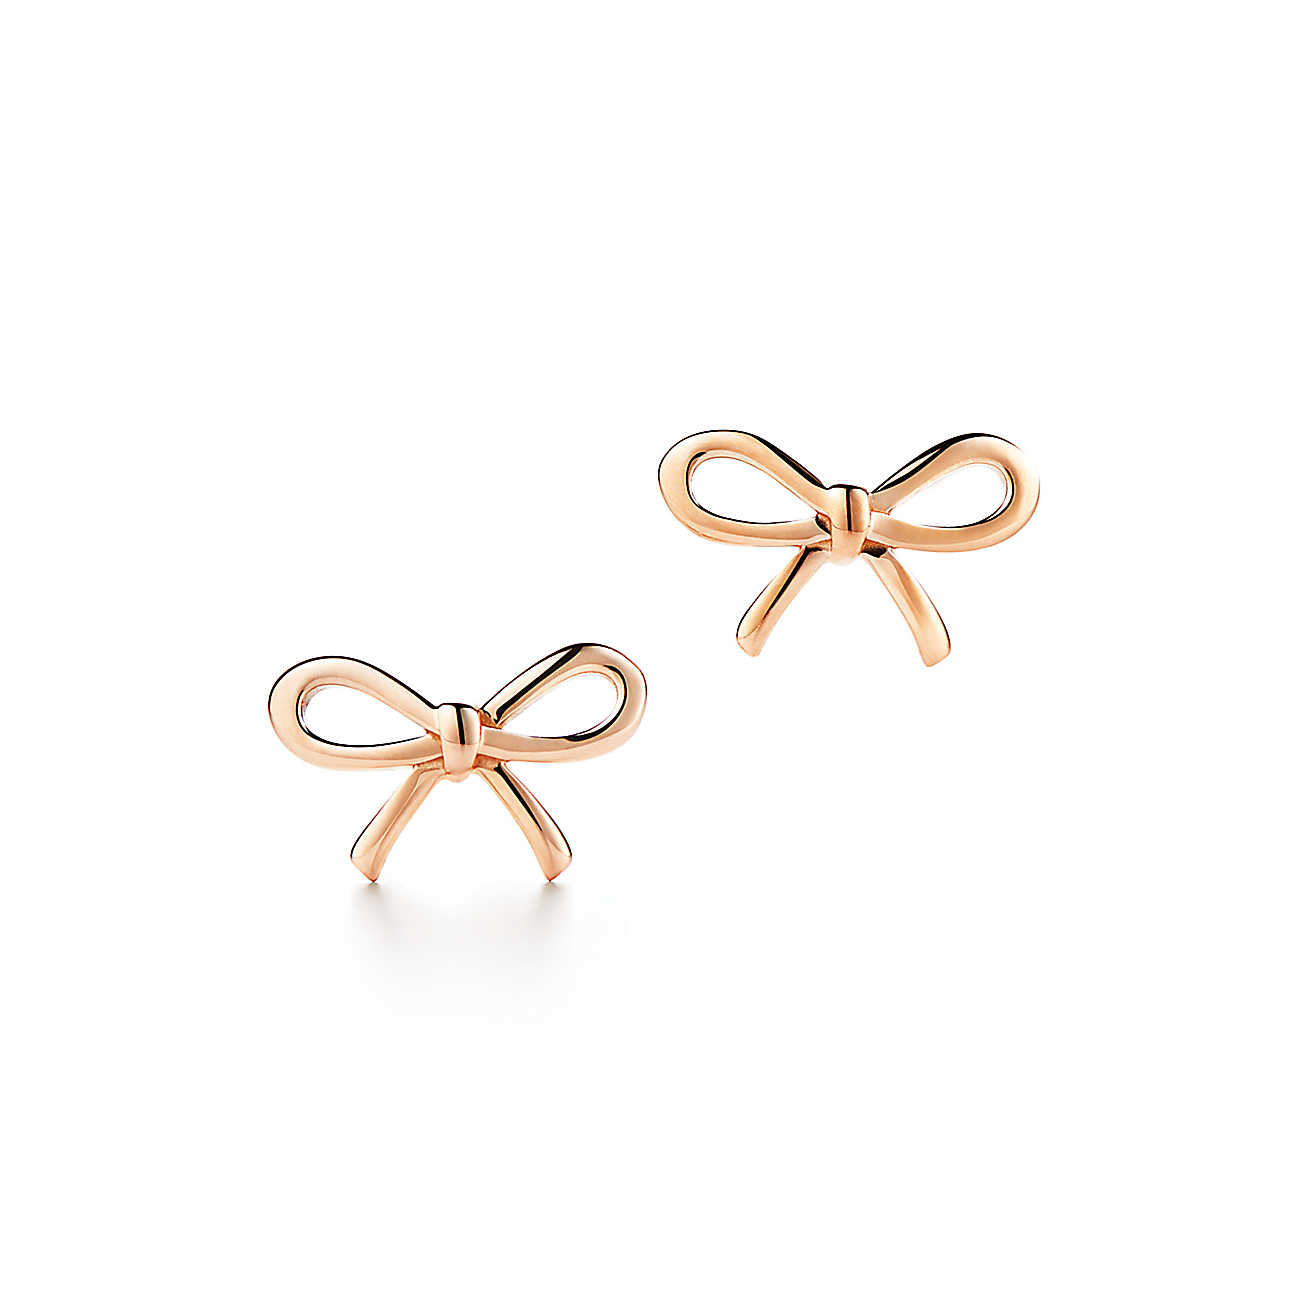 Tiffany Bow Earrings
 Tiffany Bow earrings in 18k rose gold mini